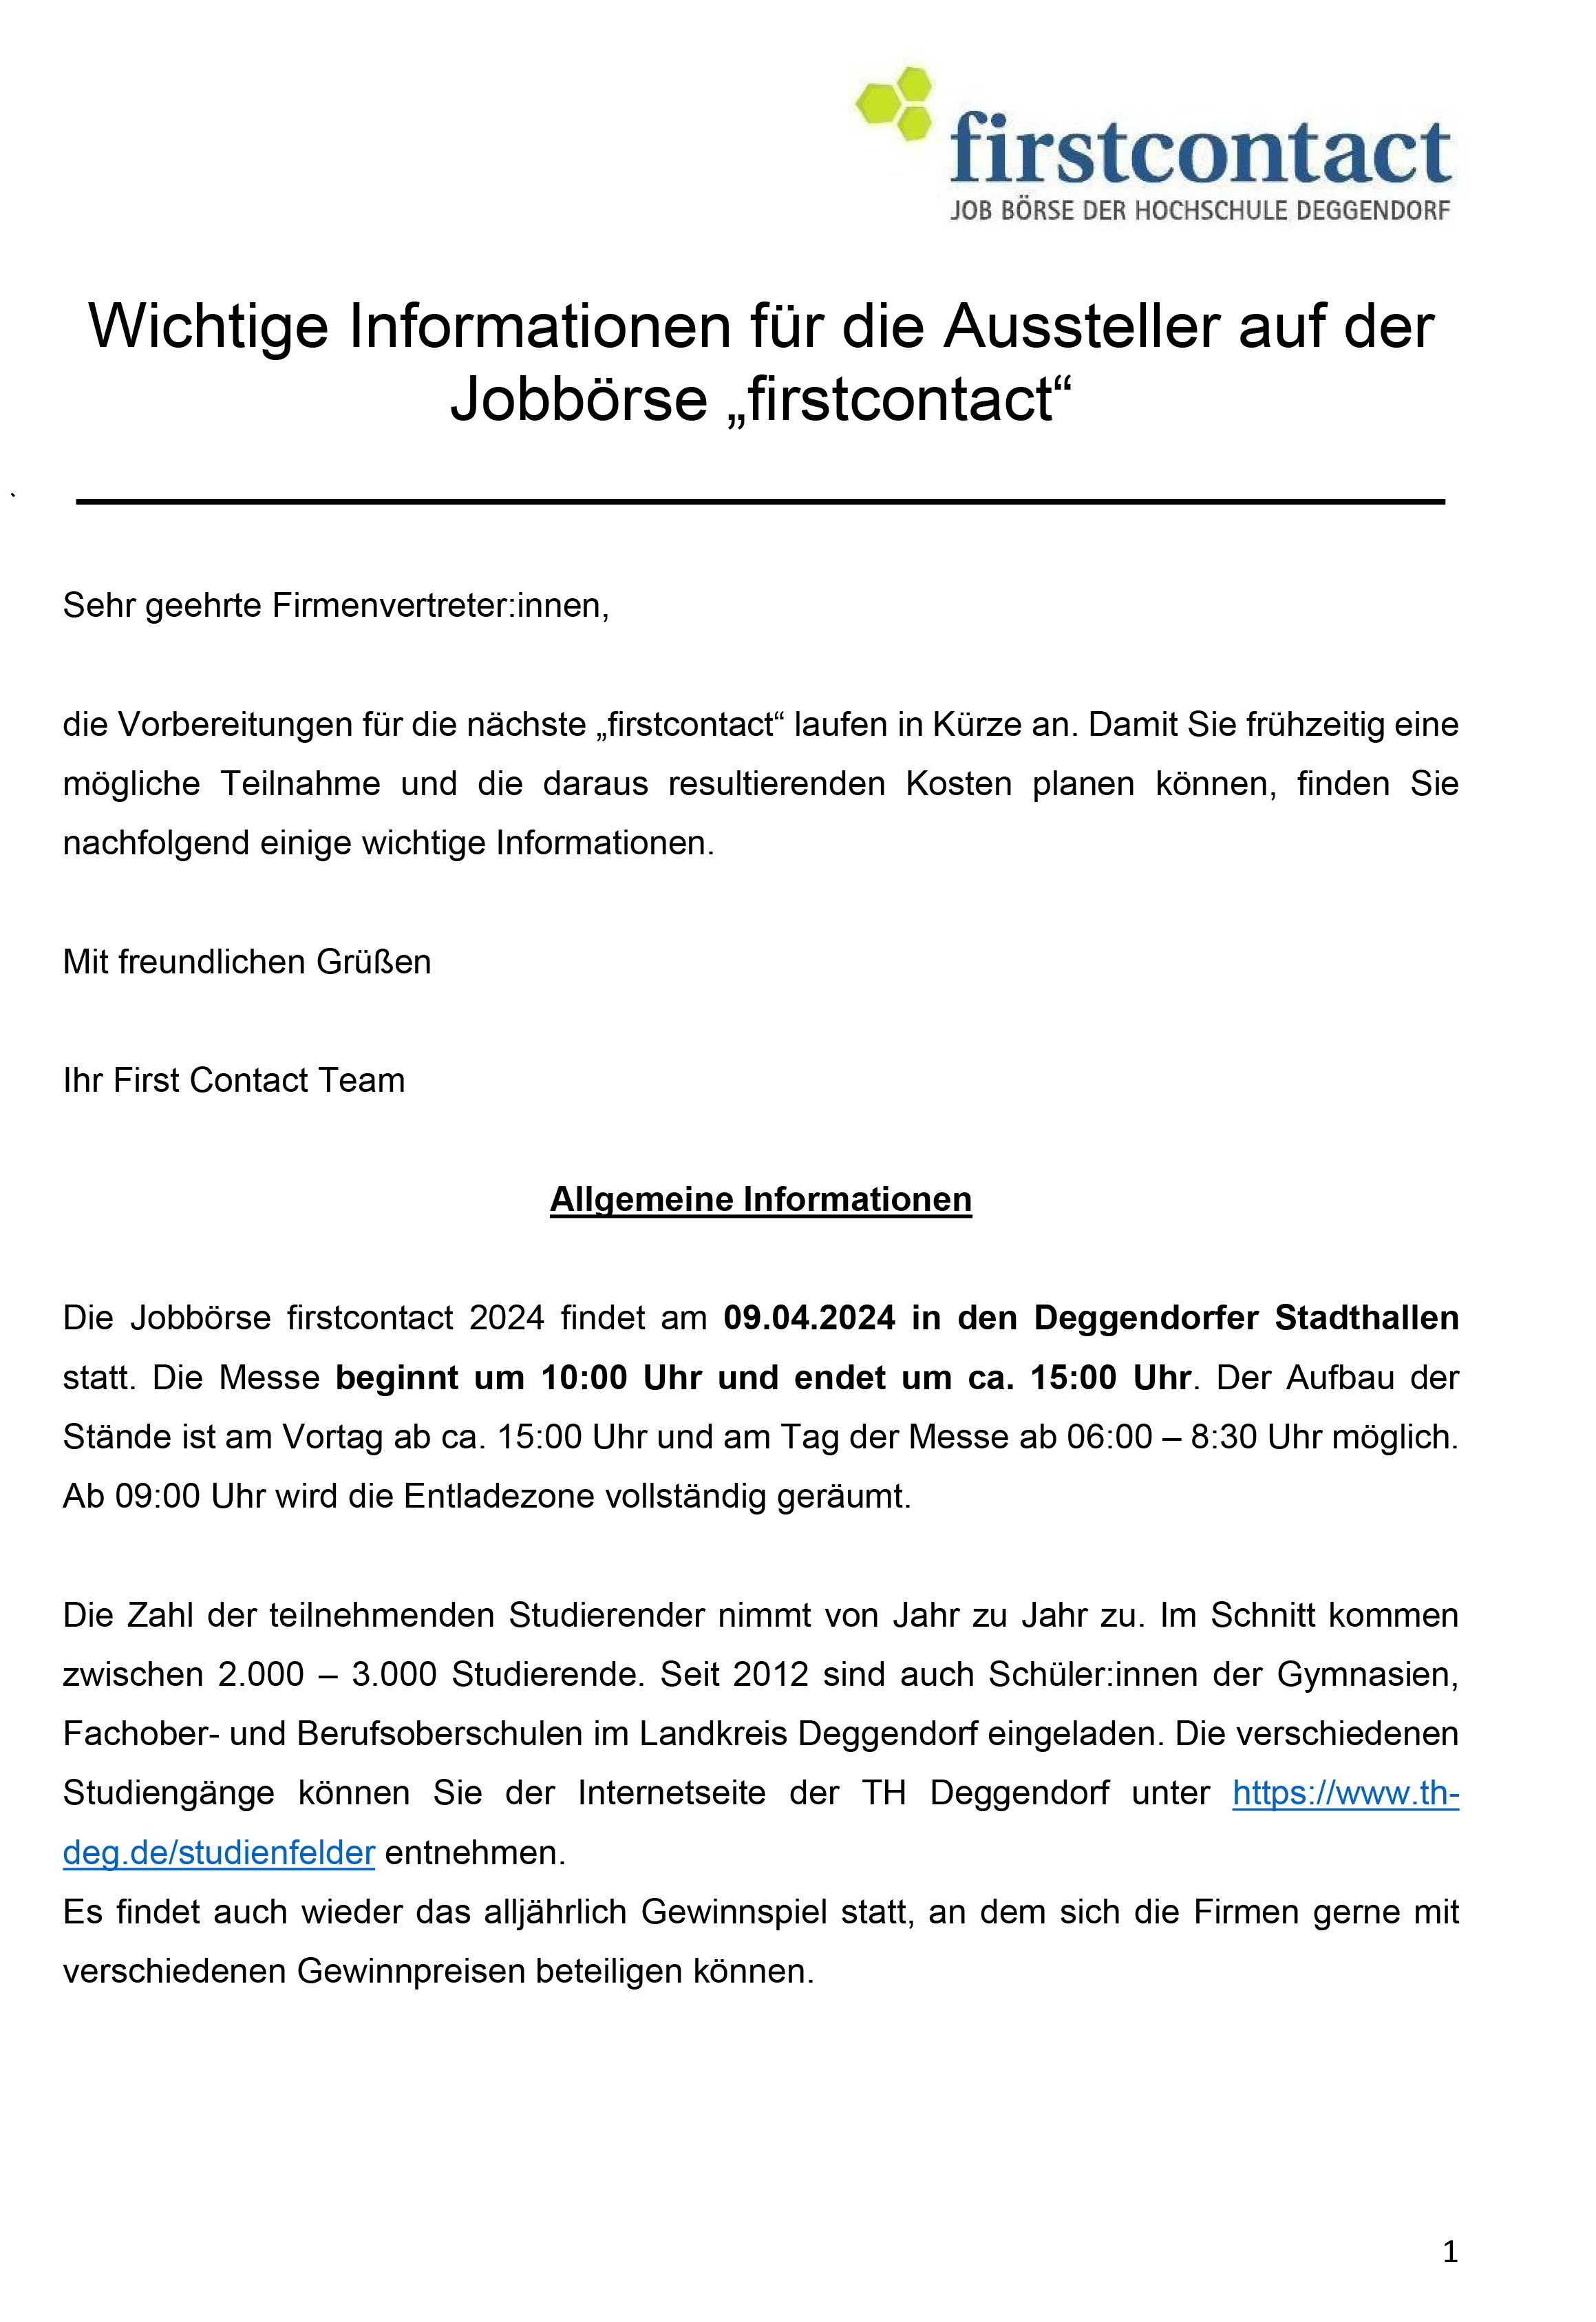 Informationsblatt_firstcontact2023